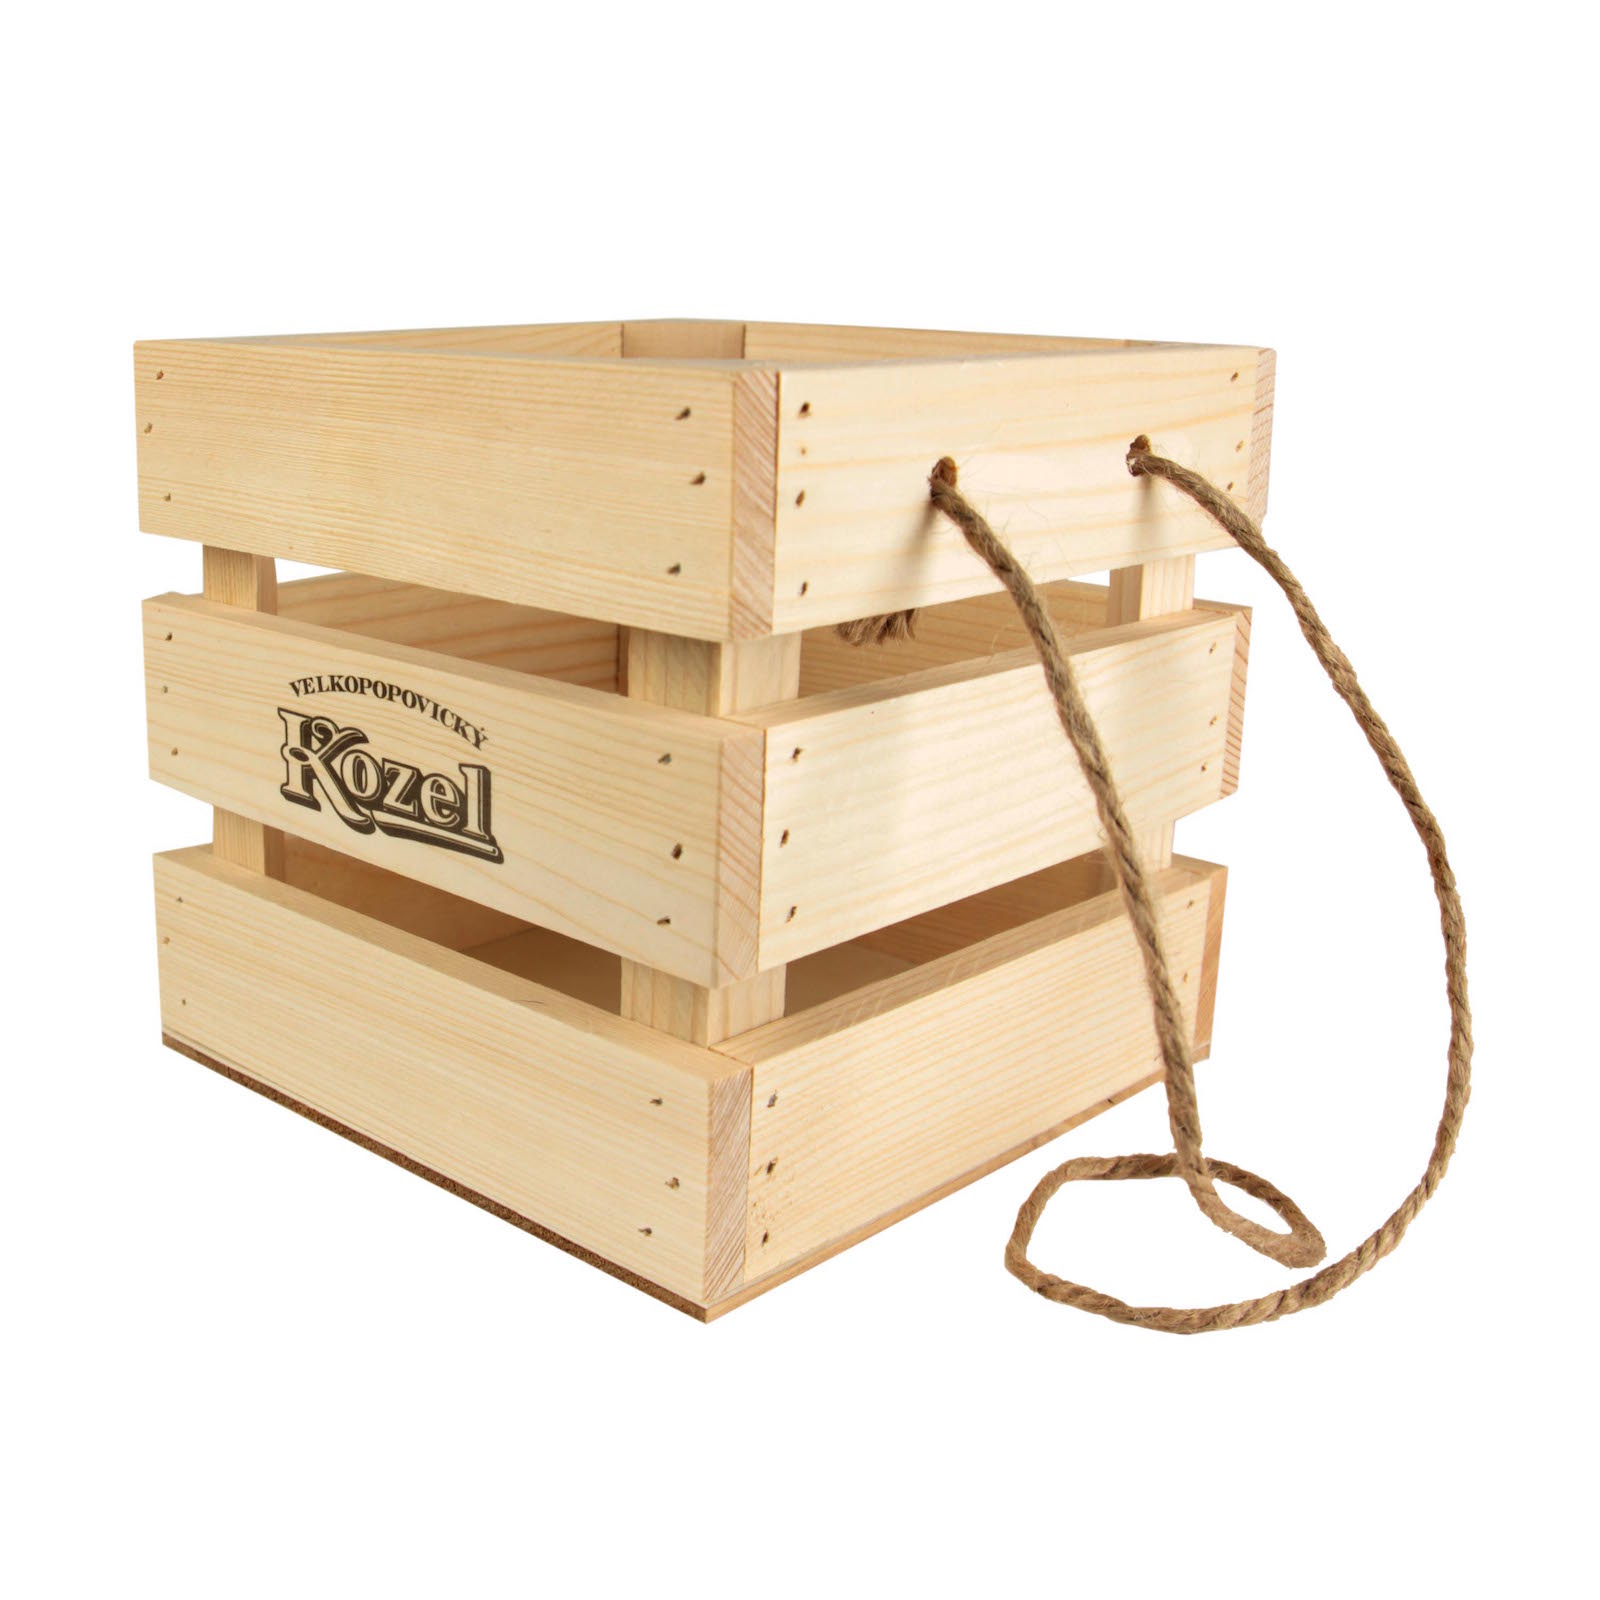 Kozel wooden crate